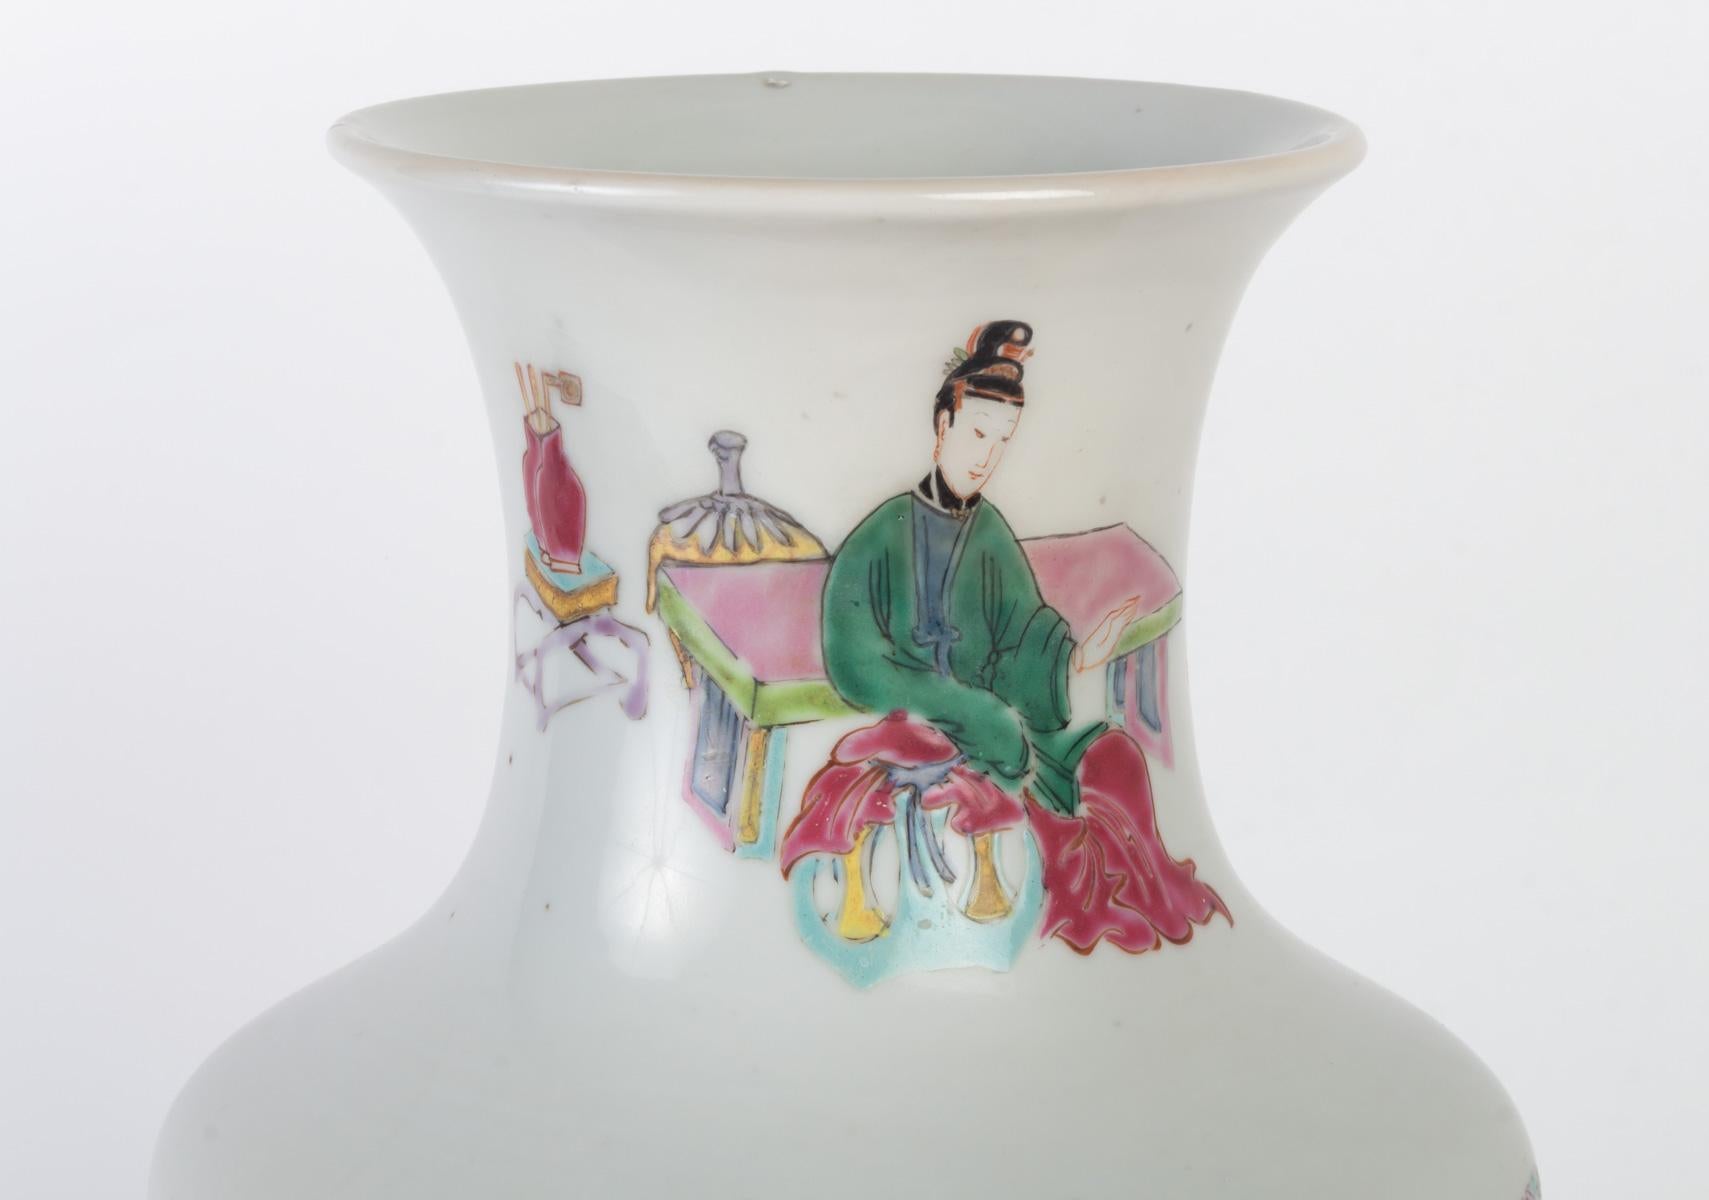 Porcelain vase, China, 18th century, pink family
Measures: H 41cm, D 17cm.